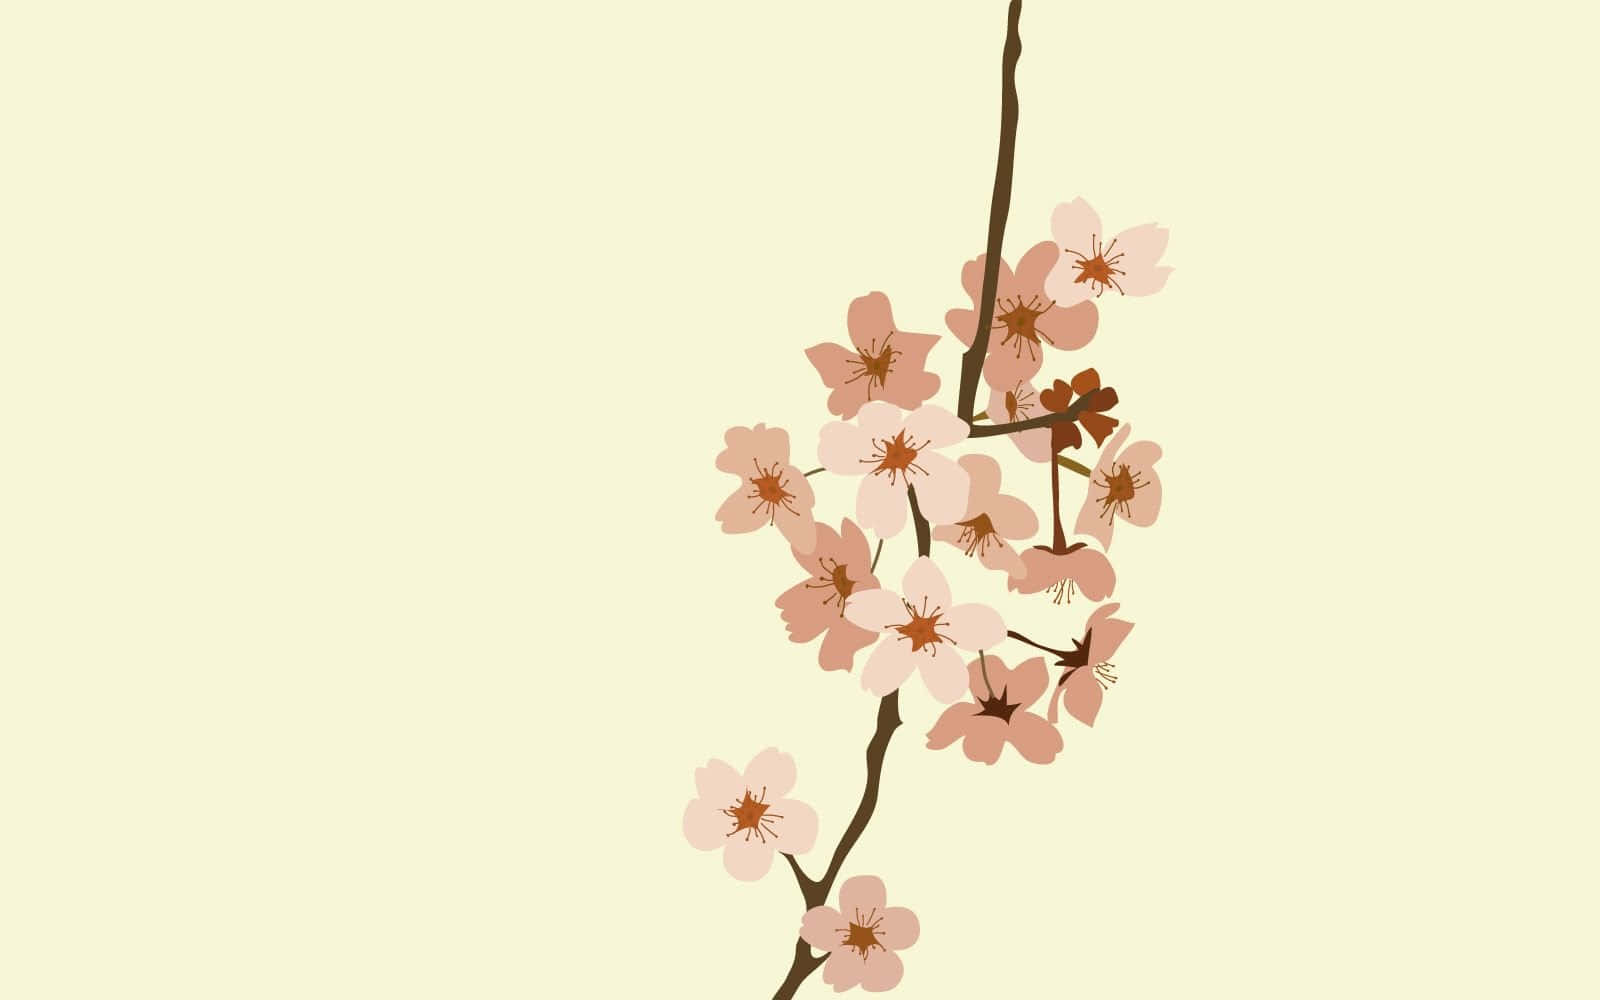 A Lovely Spring Aesthetic to Enhance your Desktop Wallpaper